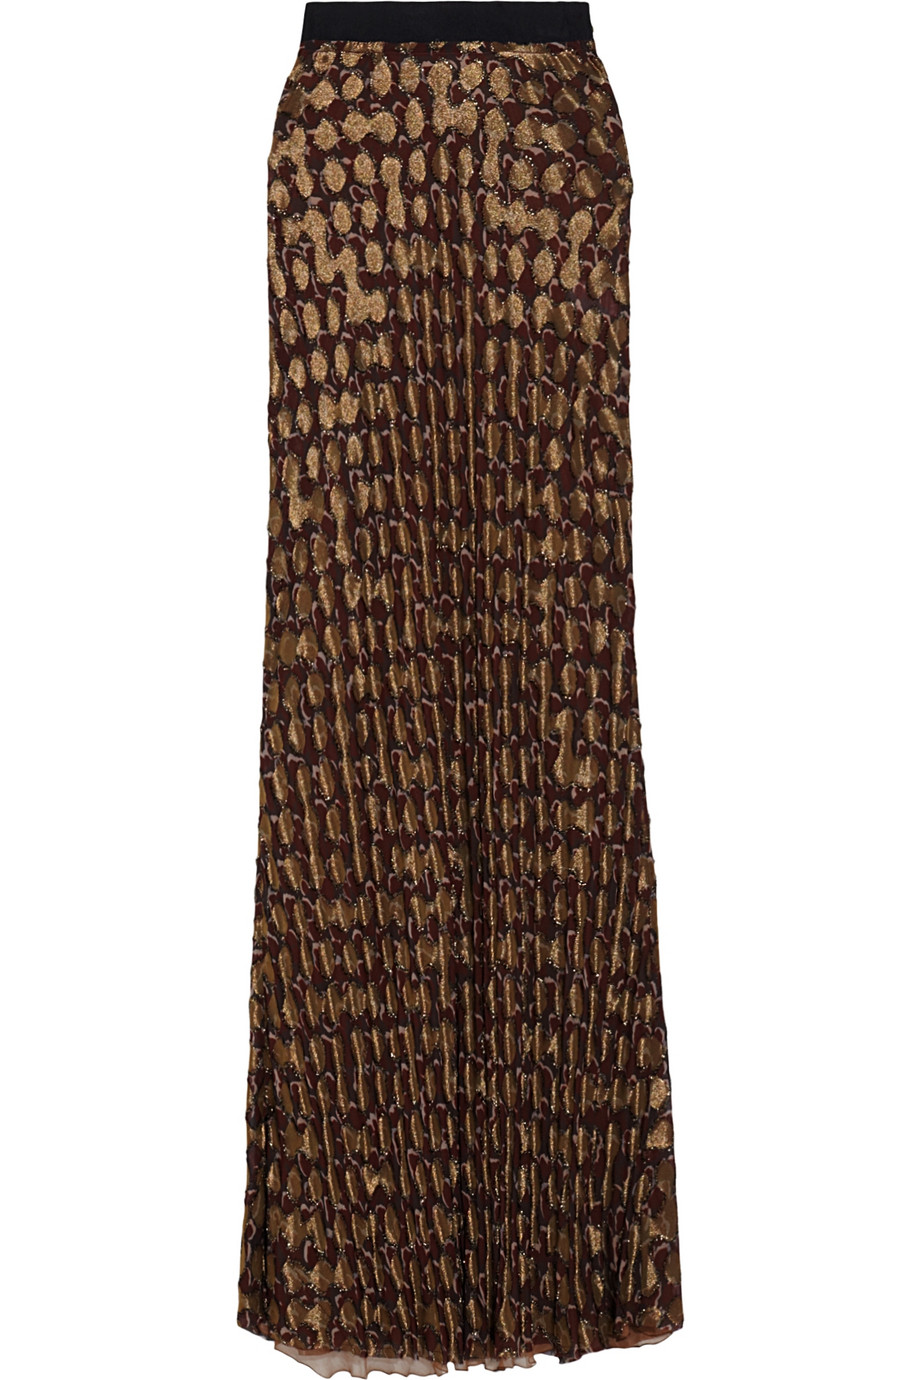 Lyst - Lanvin Appliqué Silk-blend Maxi Skirt in Brown